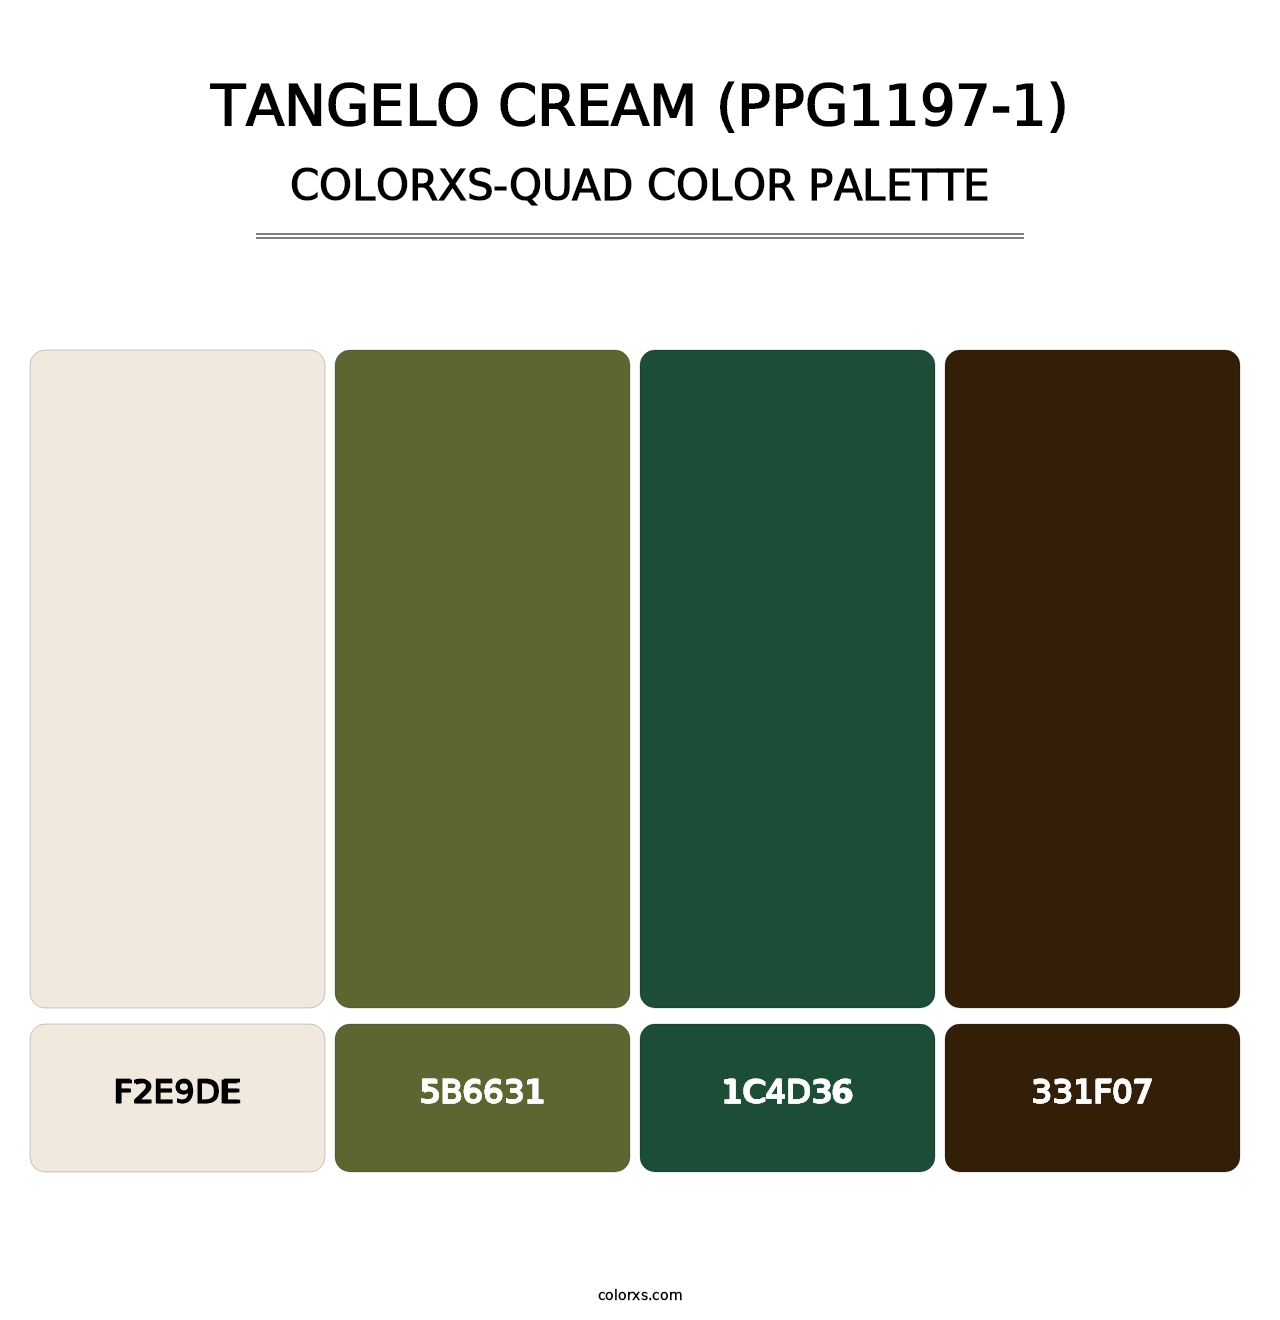 Tangelo Cream (PPG1197-1) - Colorxs Quad Palette